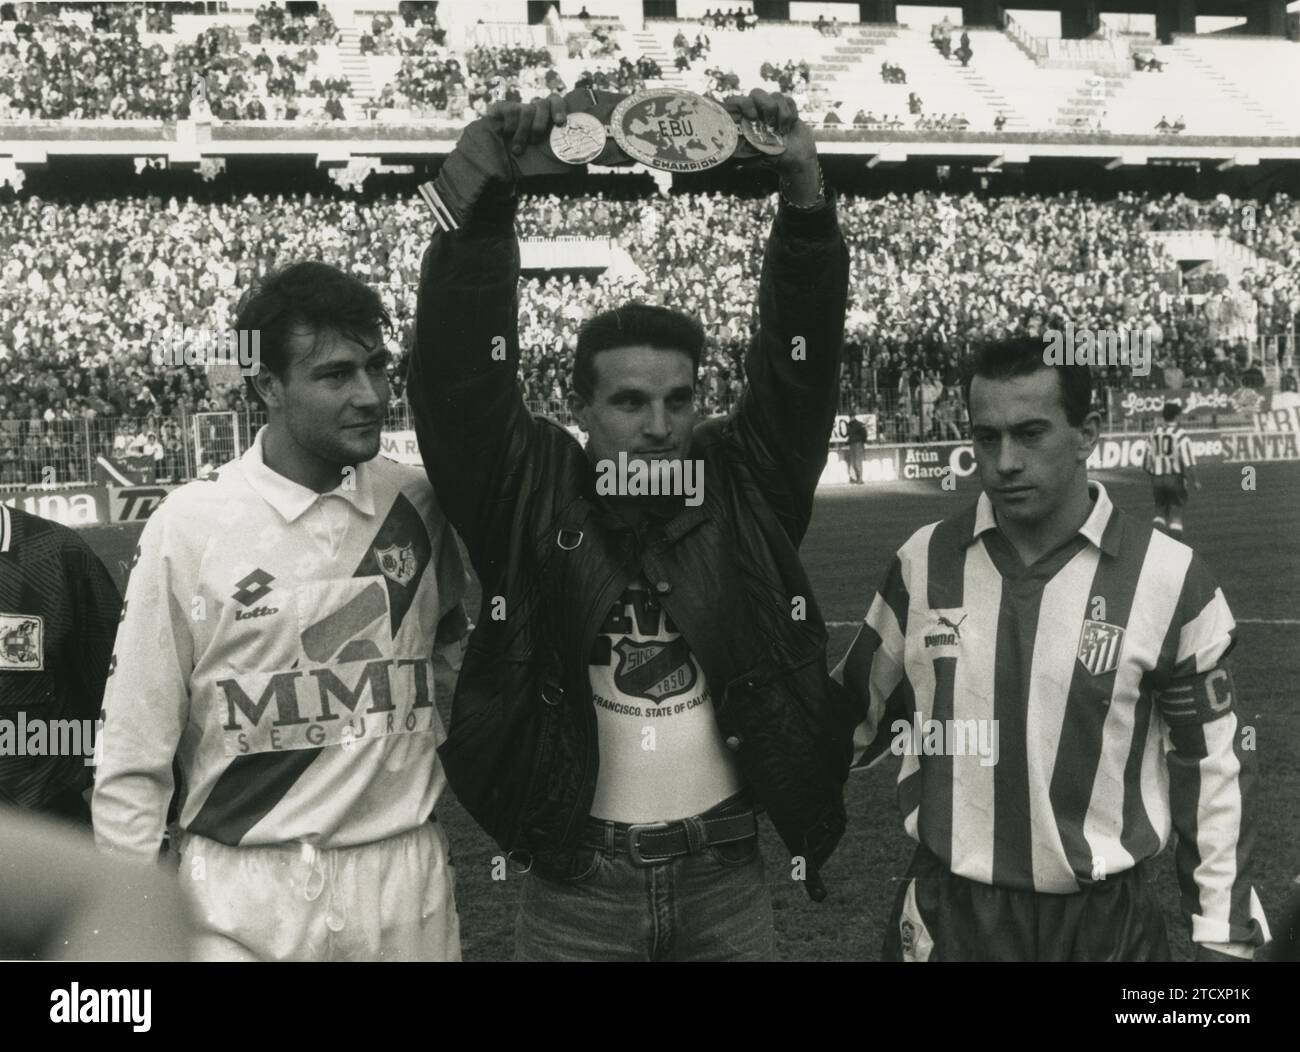 Madrid, 01/16/1994. Javier Castillejo, campione europeo dei pesi welter. Crediti: Album / Archivo ABC Foto Stock